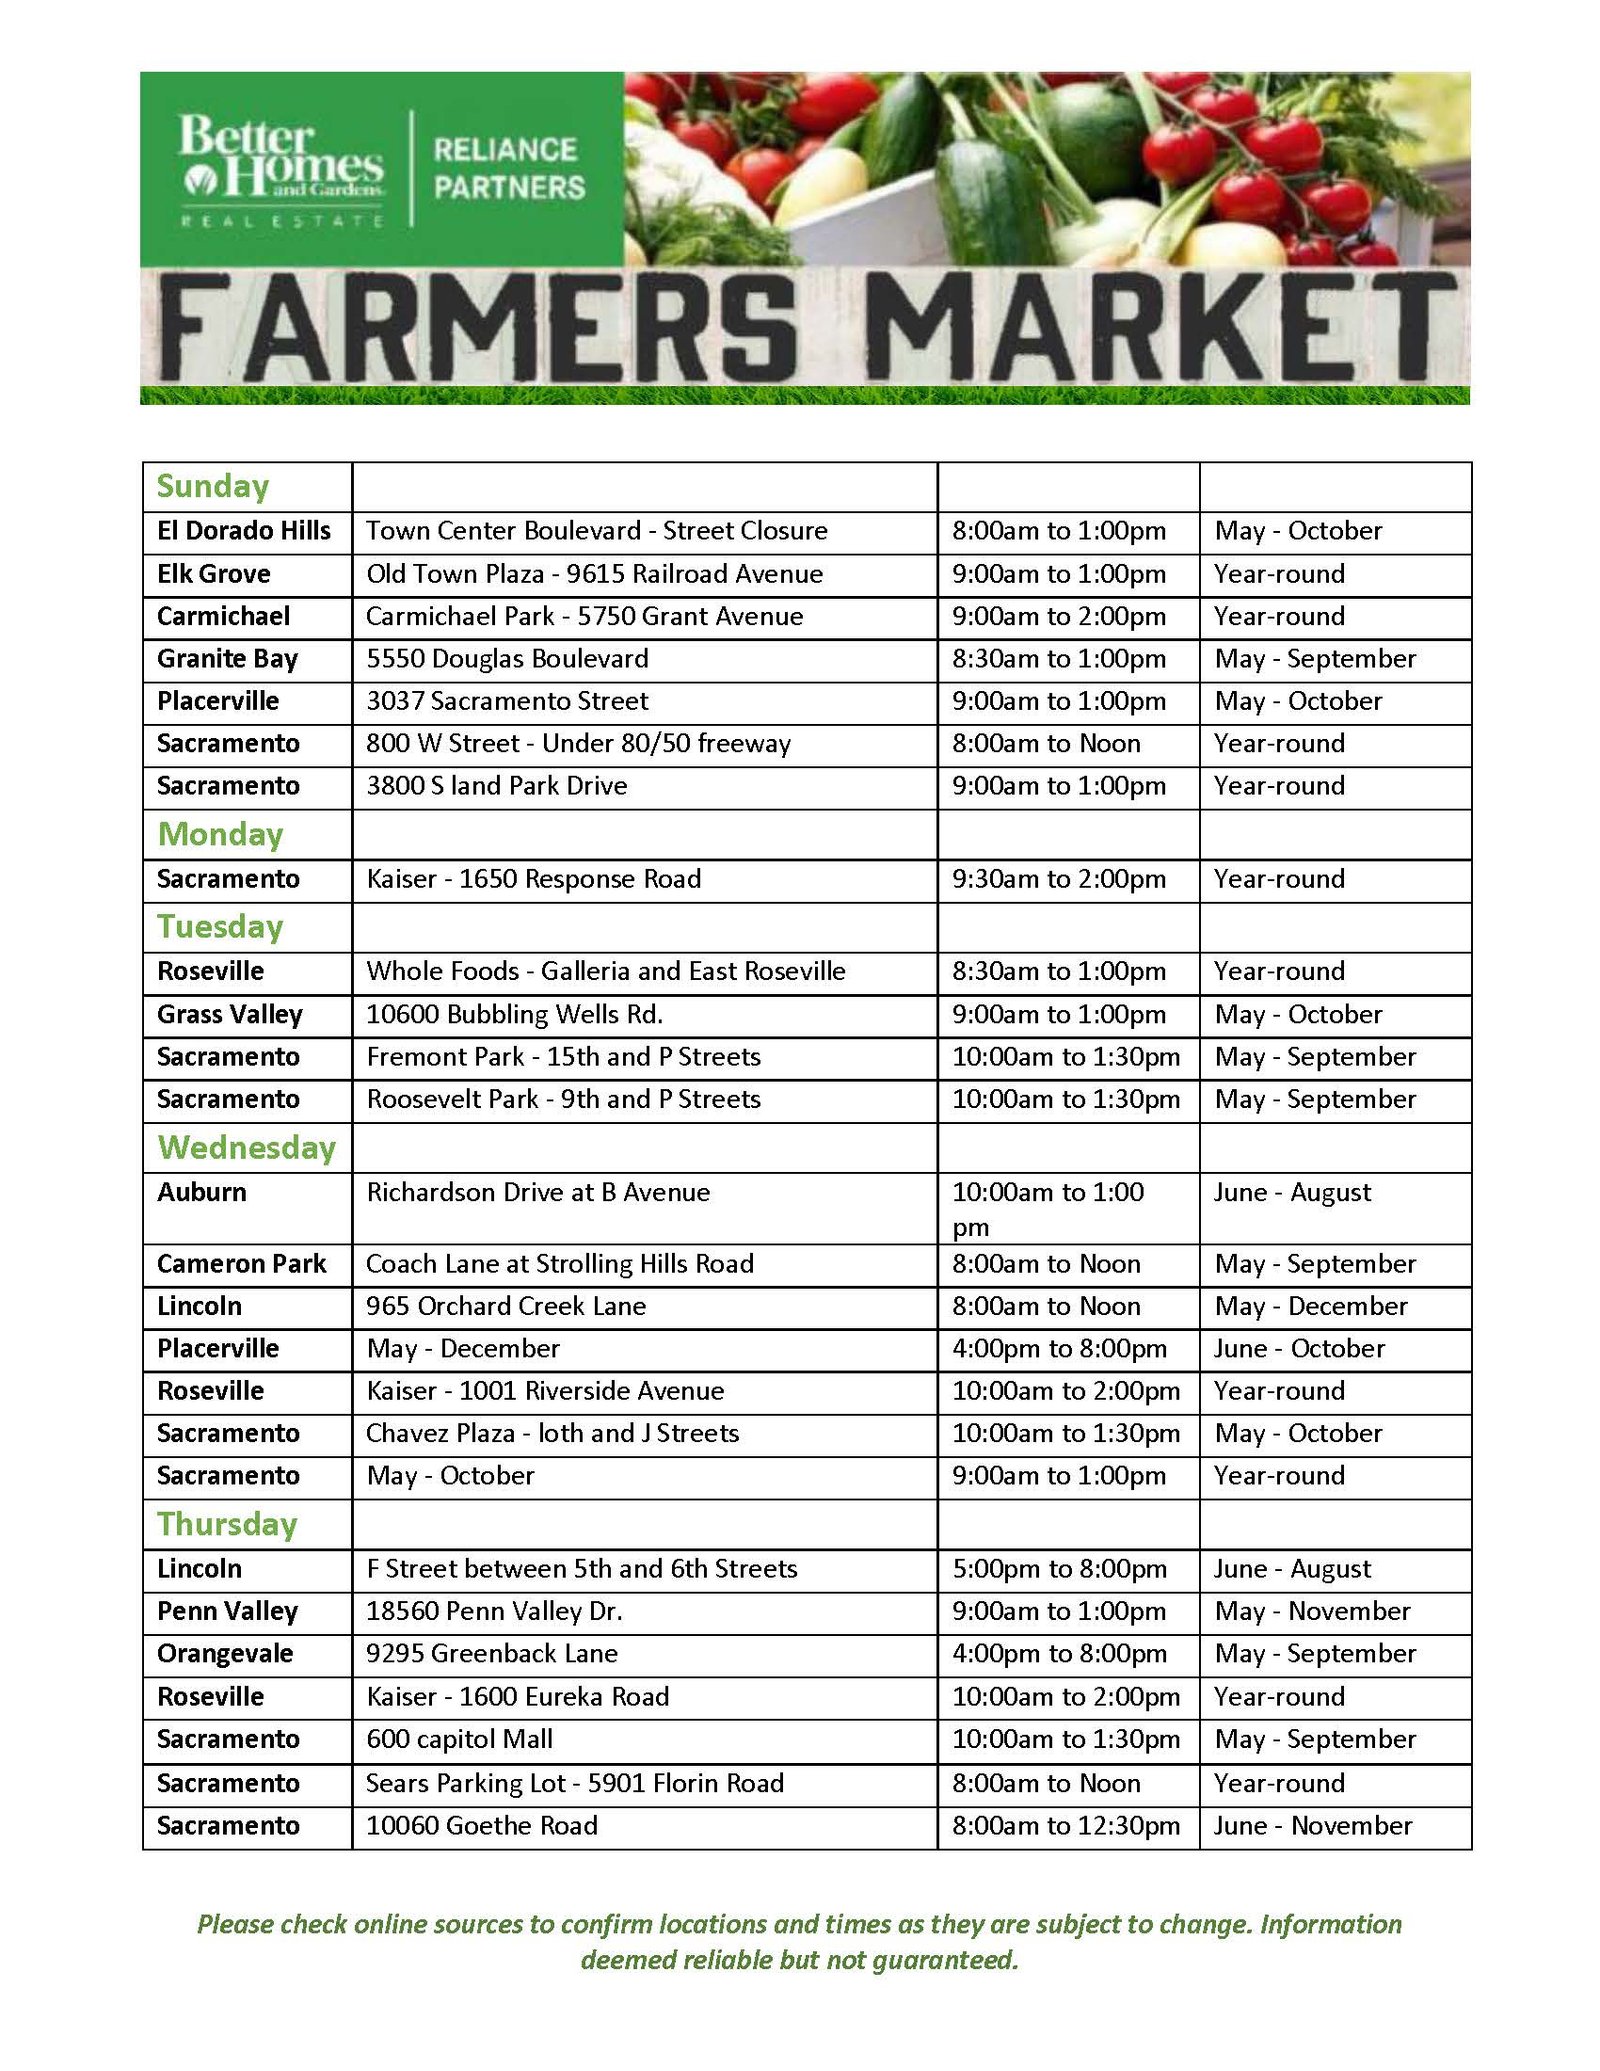 Farmer's Market Locations and Times Sacramento Real Estate Blog